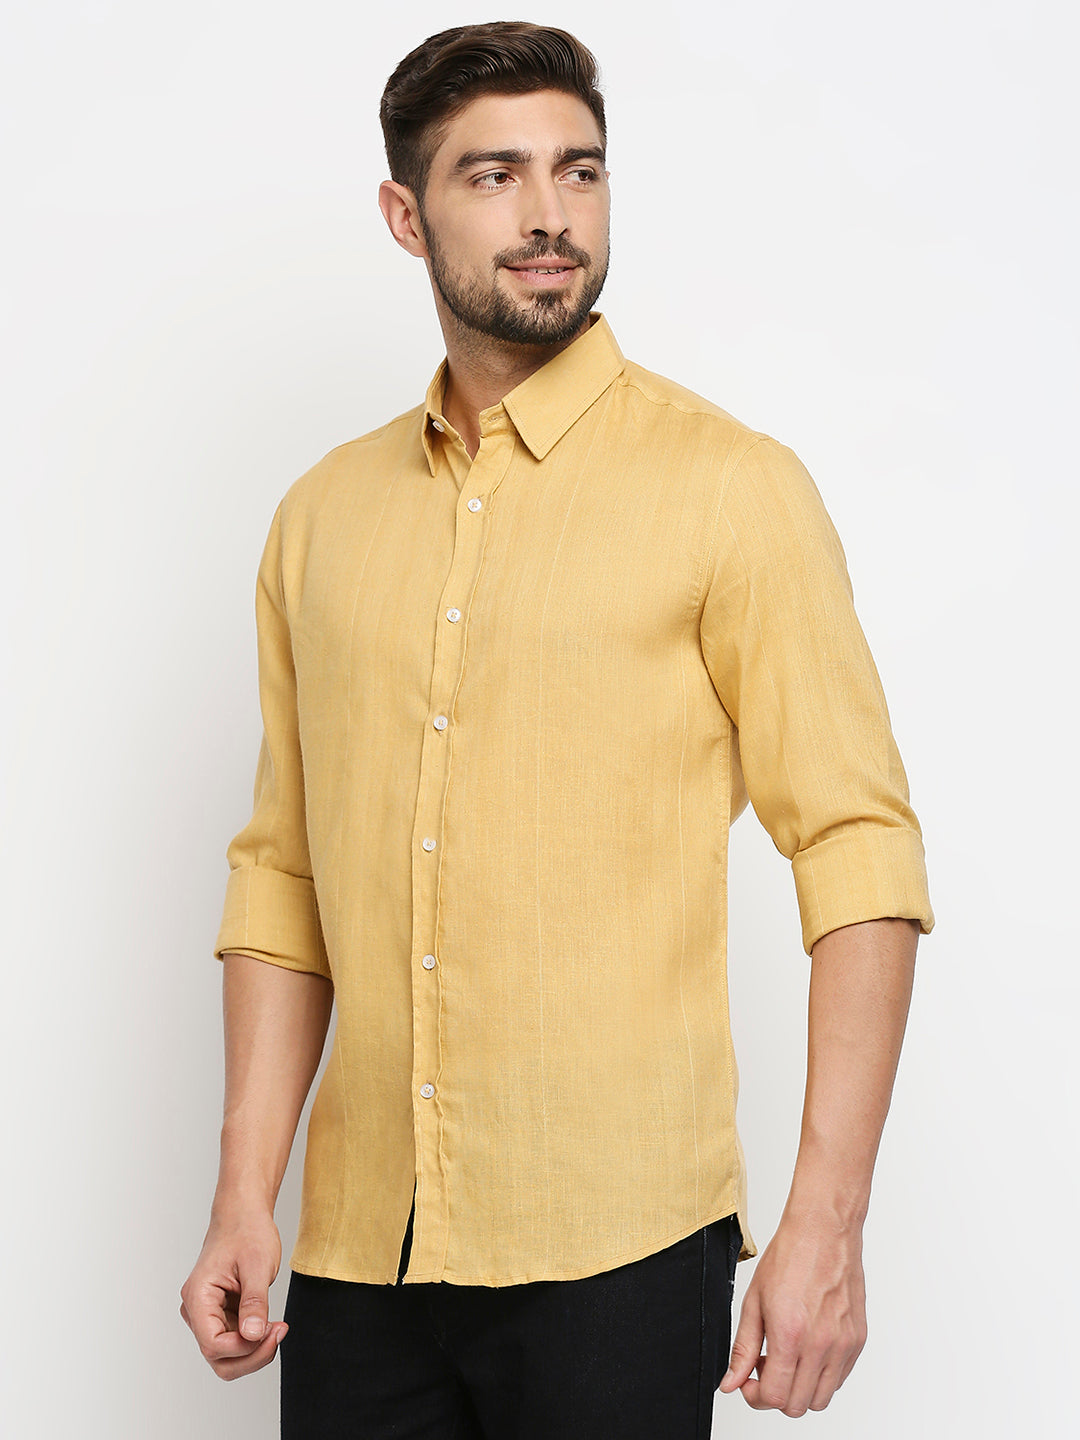 Indulge Excel Linen Khaki Shirt